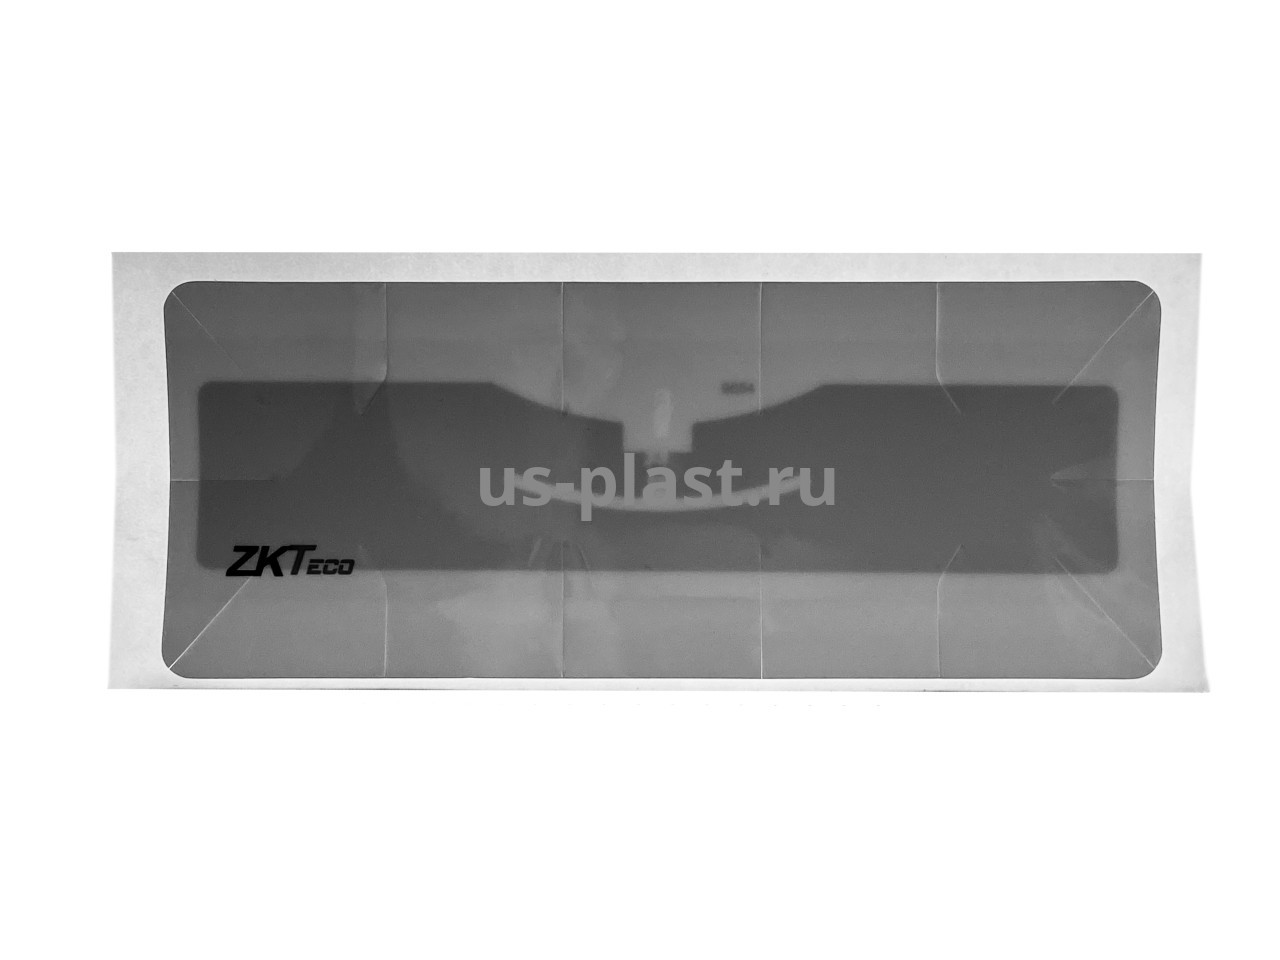 UHF RFID метка на лобовое стекло автомобиля ZKTeco UHF Parking Tag (упаковка 10 шт). Фото N5 в Санкт-Петербурге